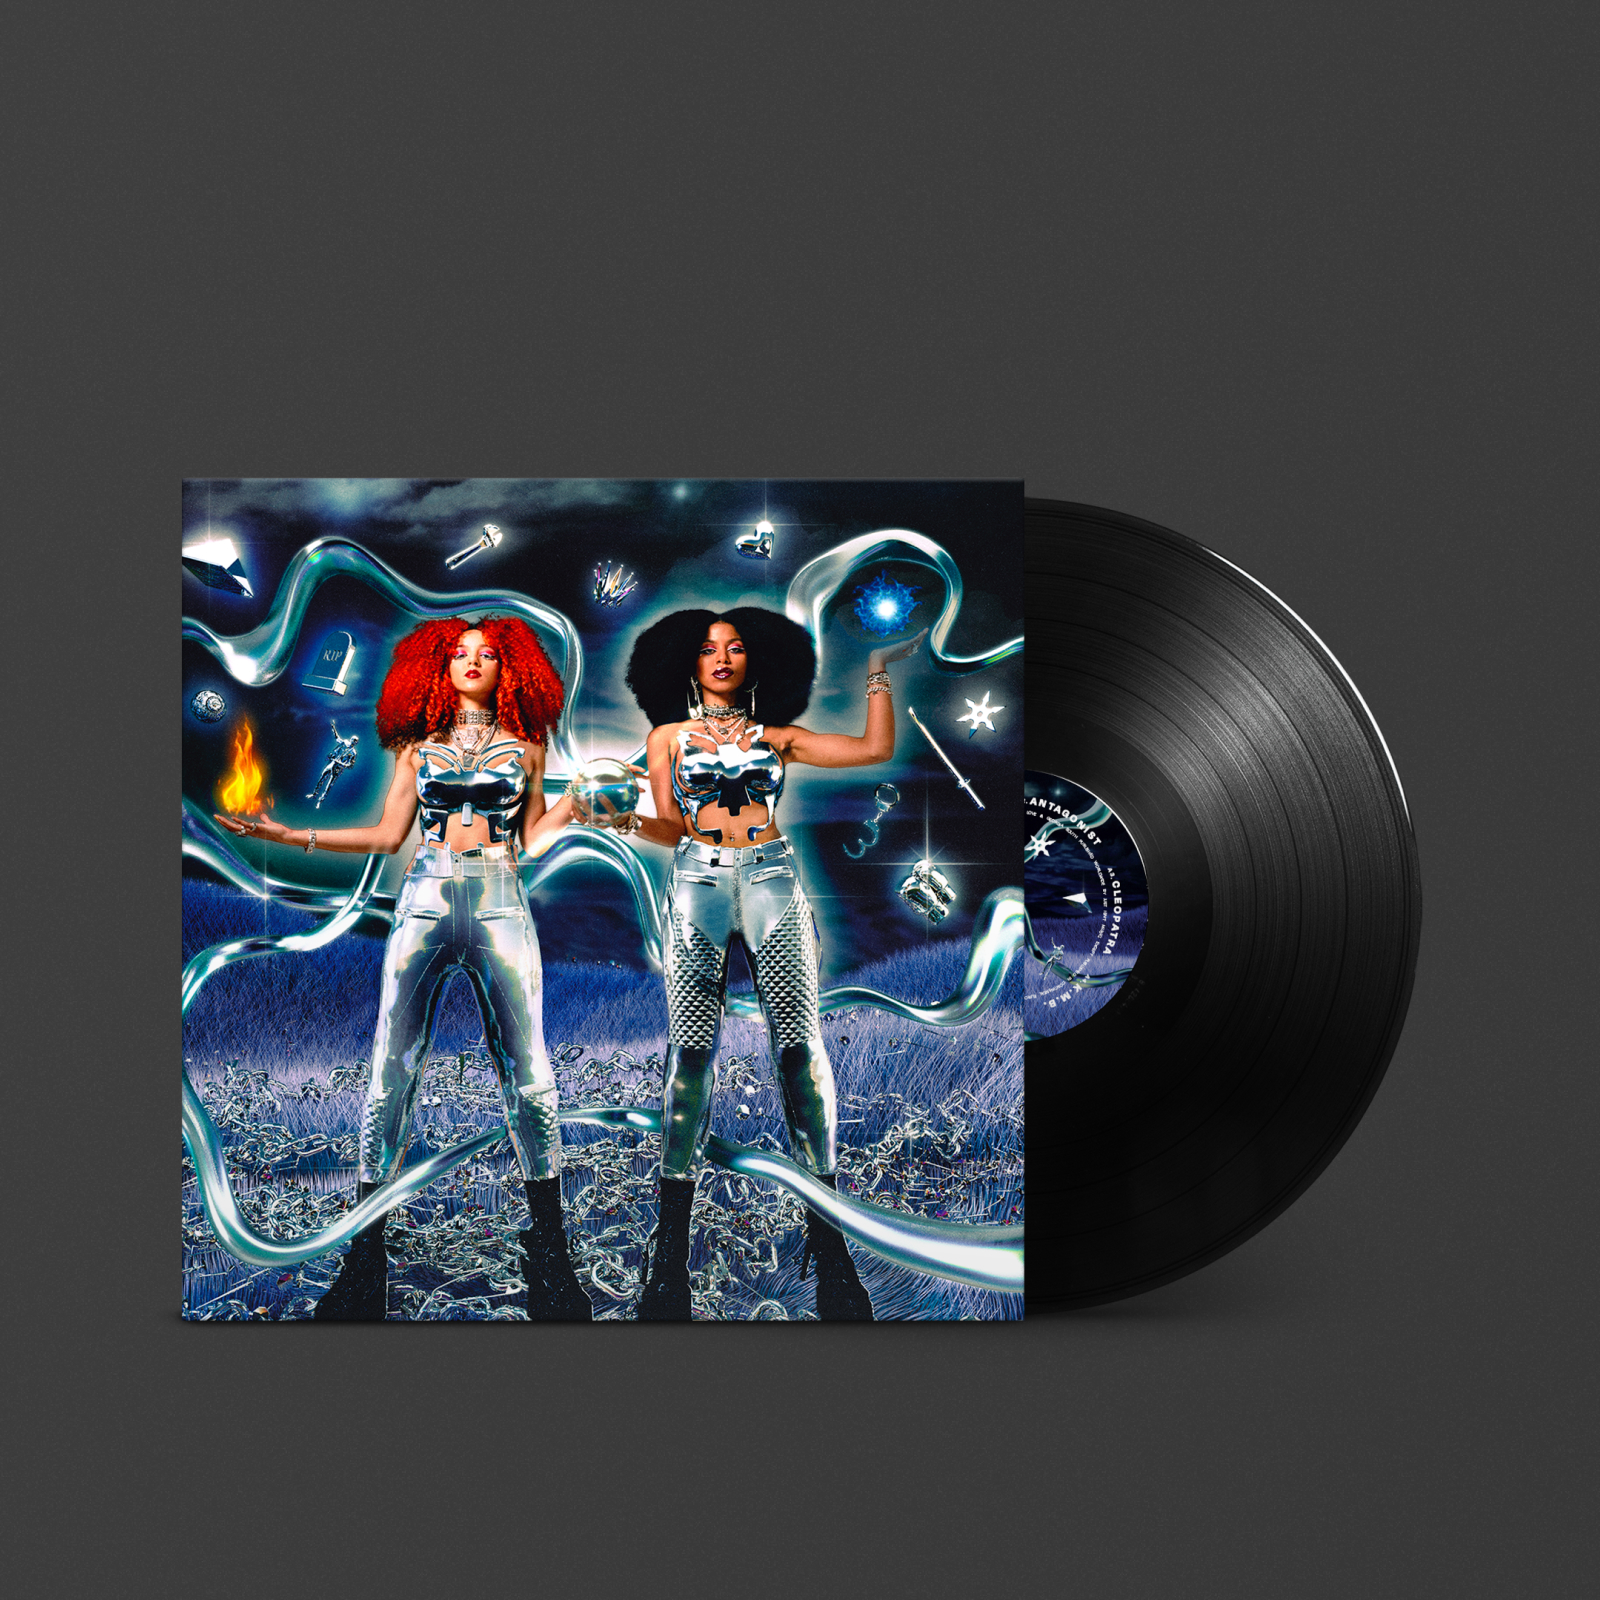  Nova Twinsによる『Supernova』のアナログレコード。